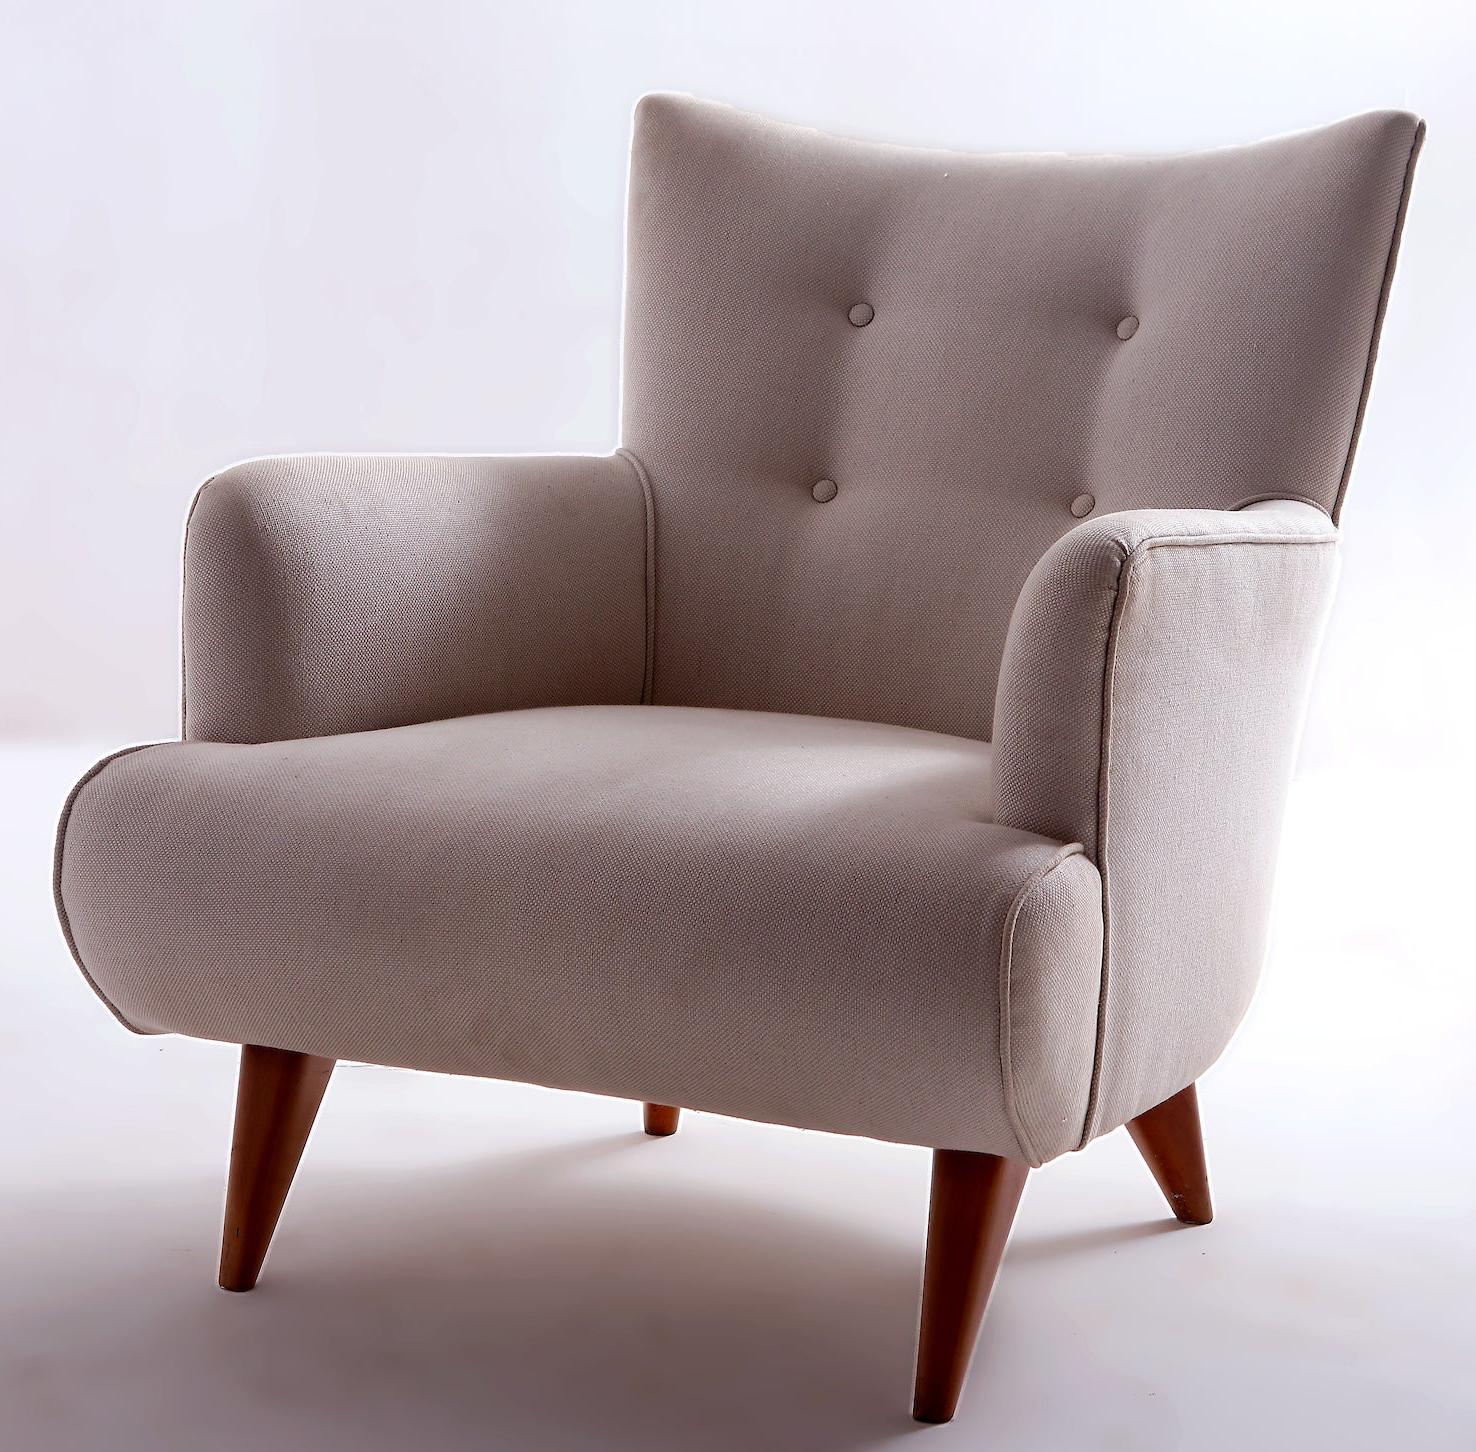 Brazilian Mid-Century Modern Upholstery Lounge Chair by Joaquim Tenreiro, Brazil, 1956 For Sale